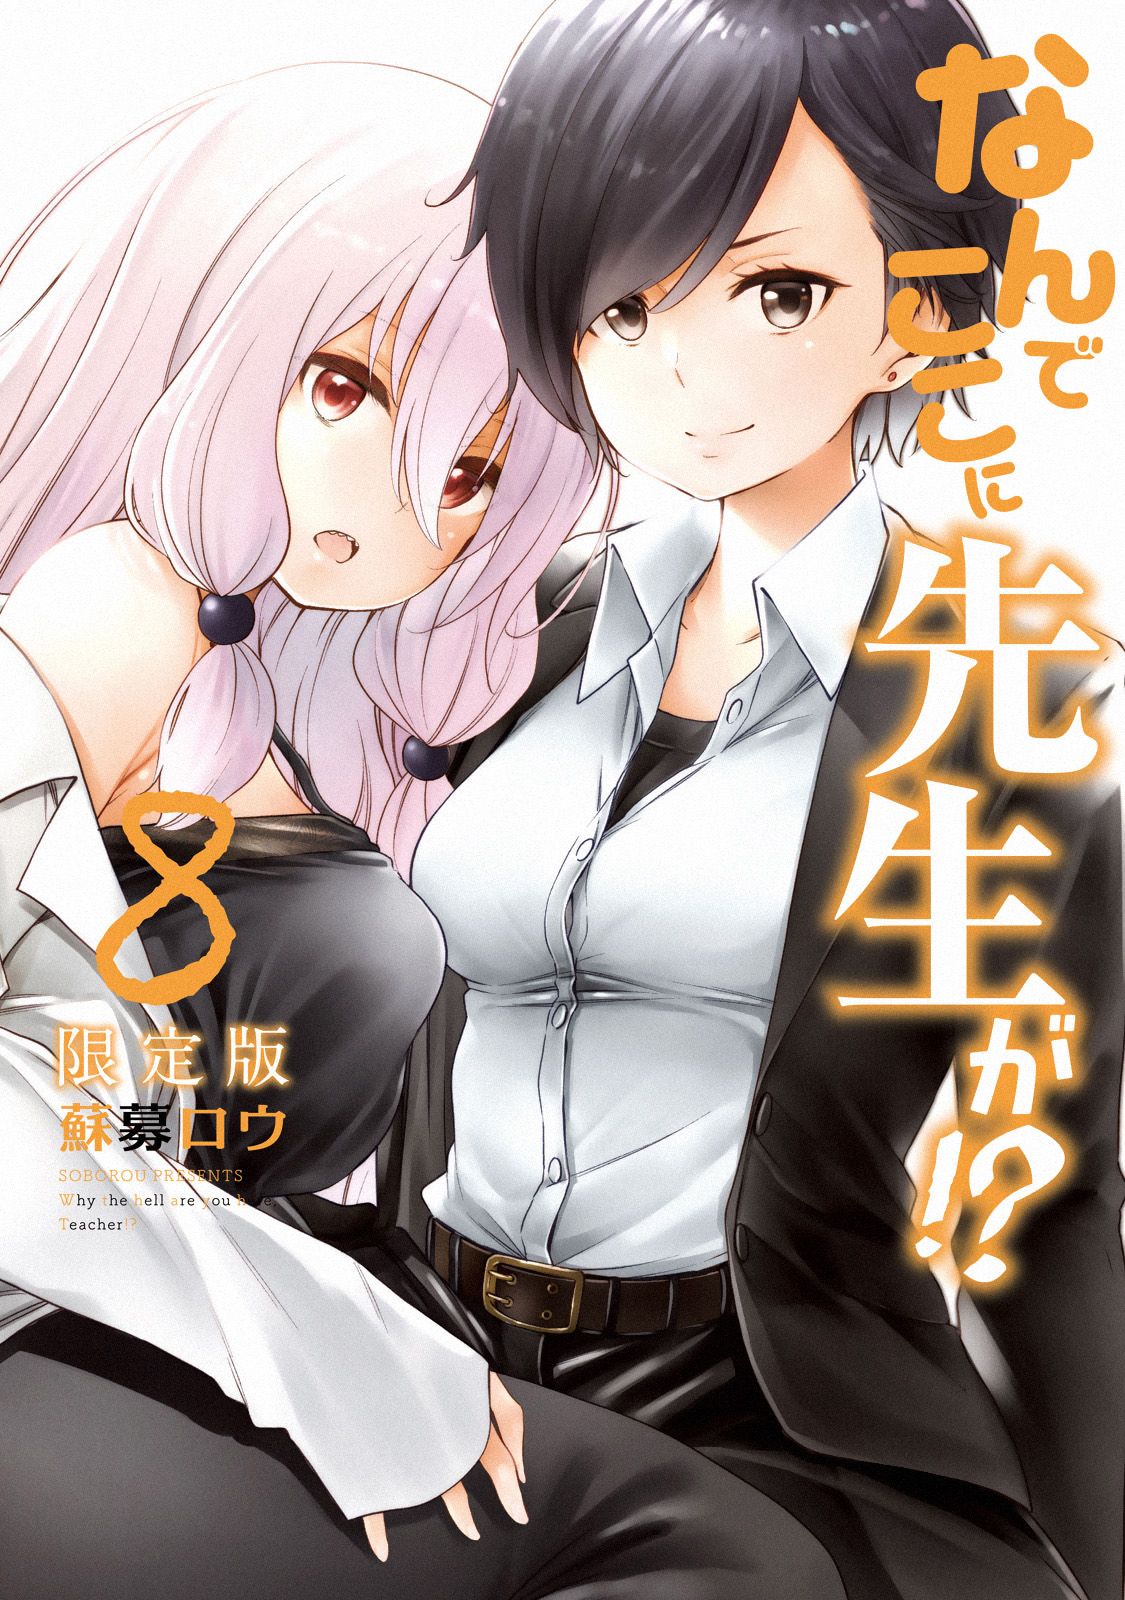 Read Why are you here Sensei!? Chapter 71 Read free manga ...